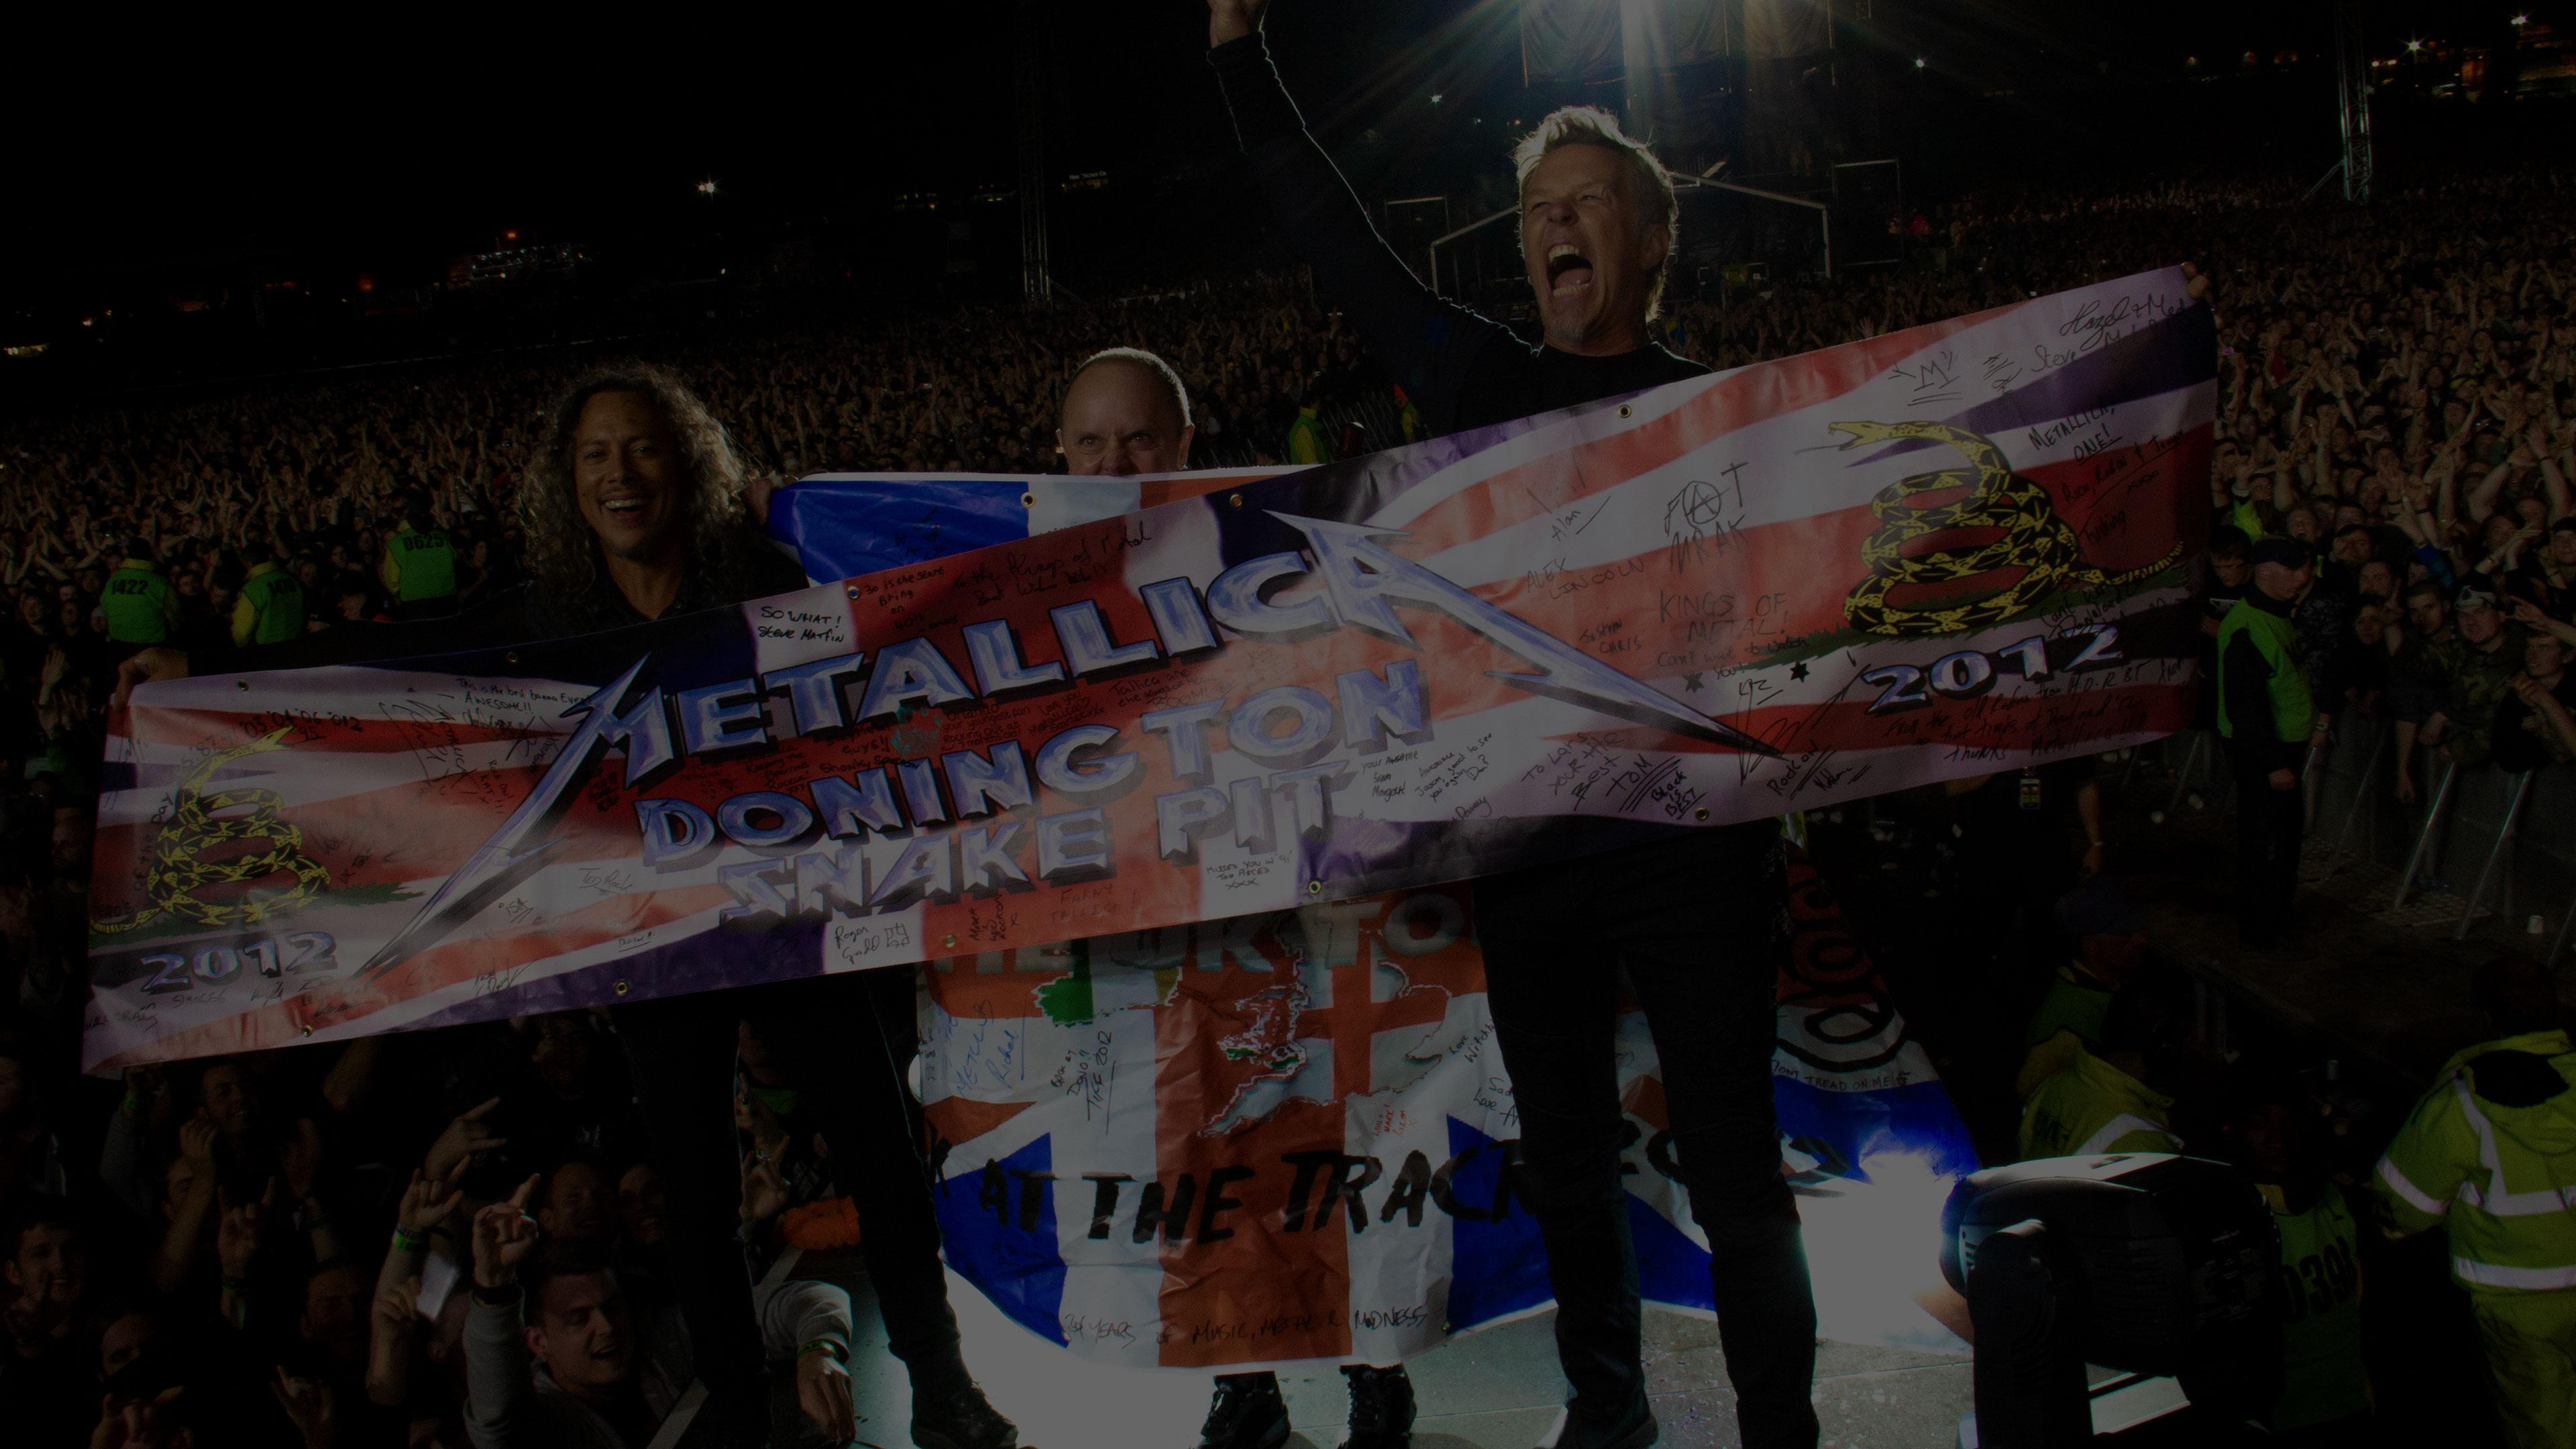 Metallica at Download Festival at Donington Park in Castle Donington, England on June 9, 2012